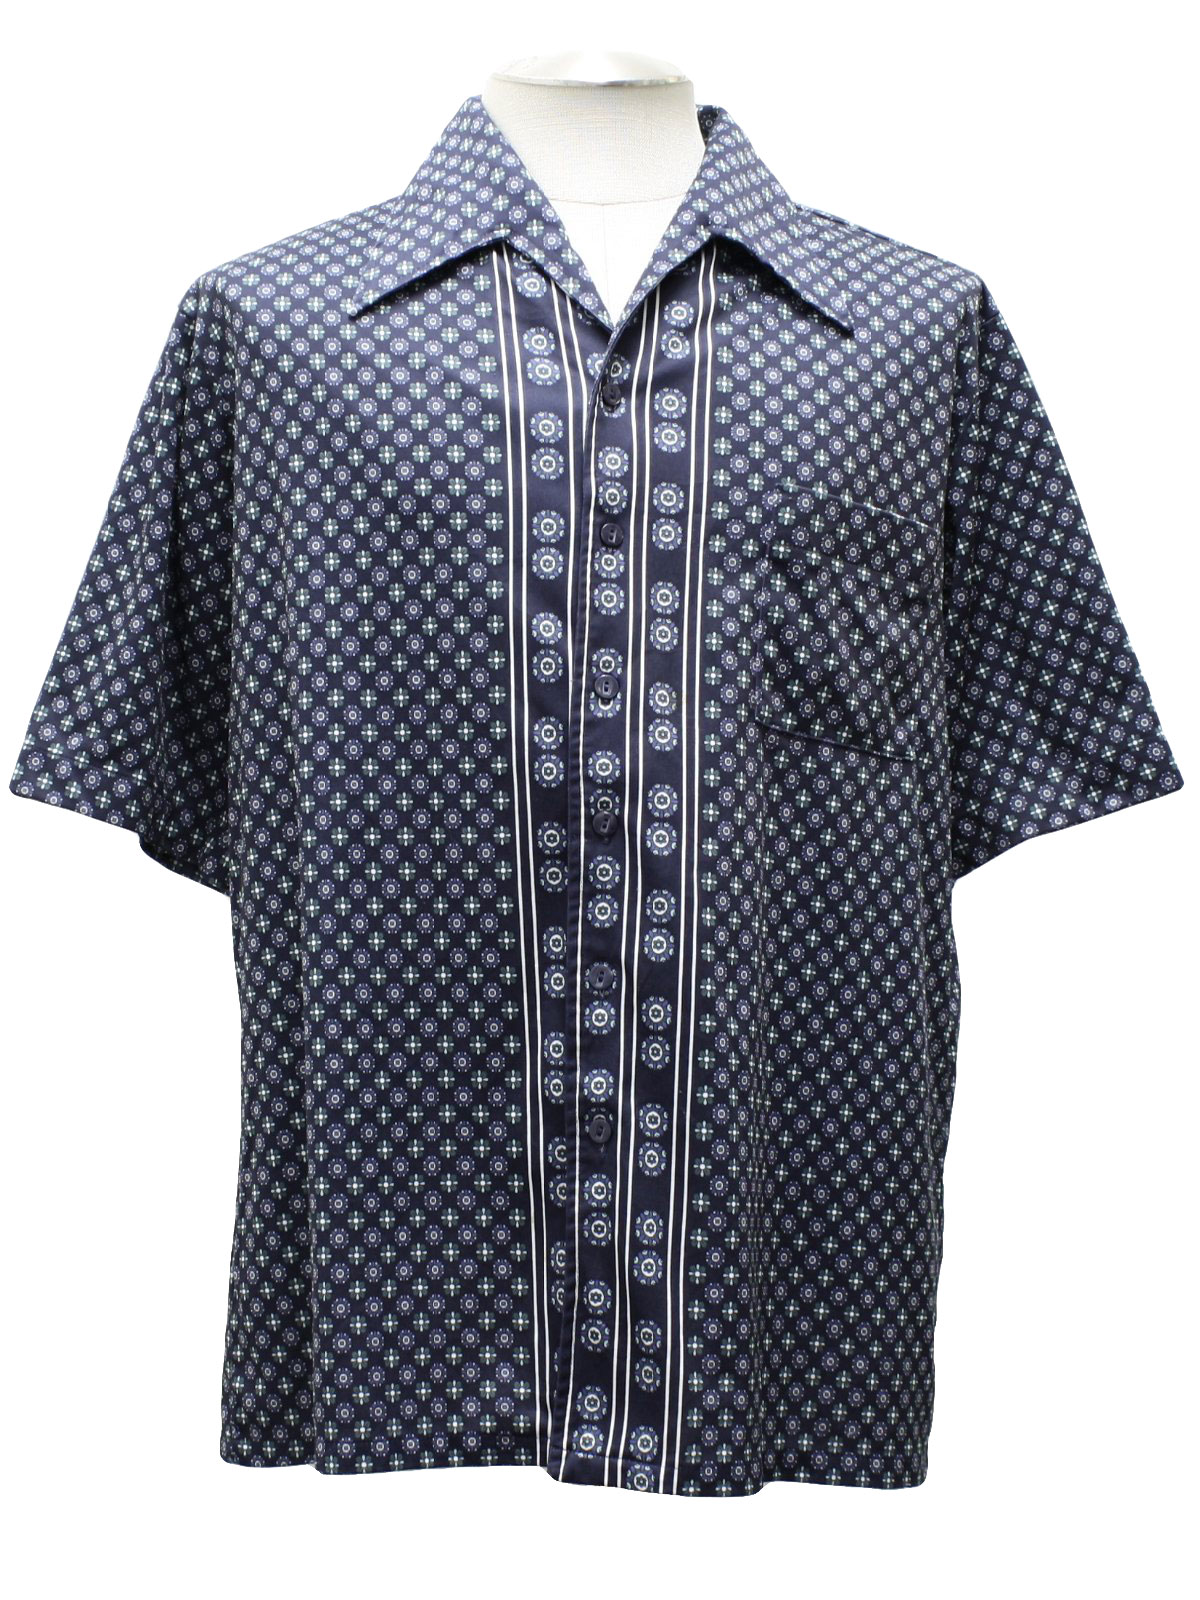 Vintage 70's Print Disco Shirt: 70s -no label- Mens navy blue with blue ...